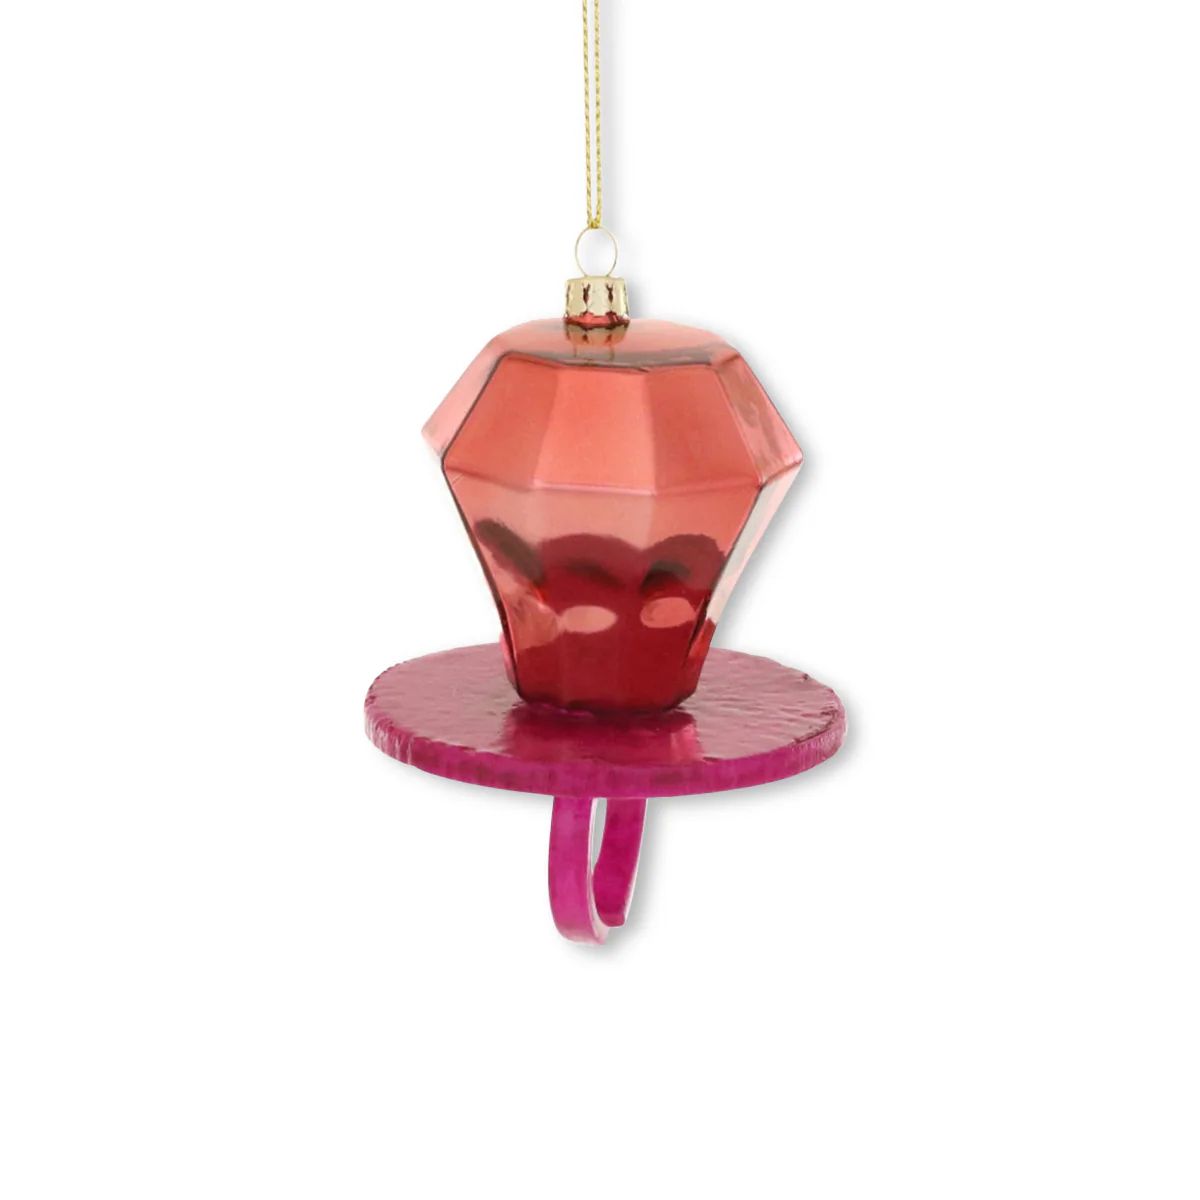 Ring Pop Ornament | Furbish Studio